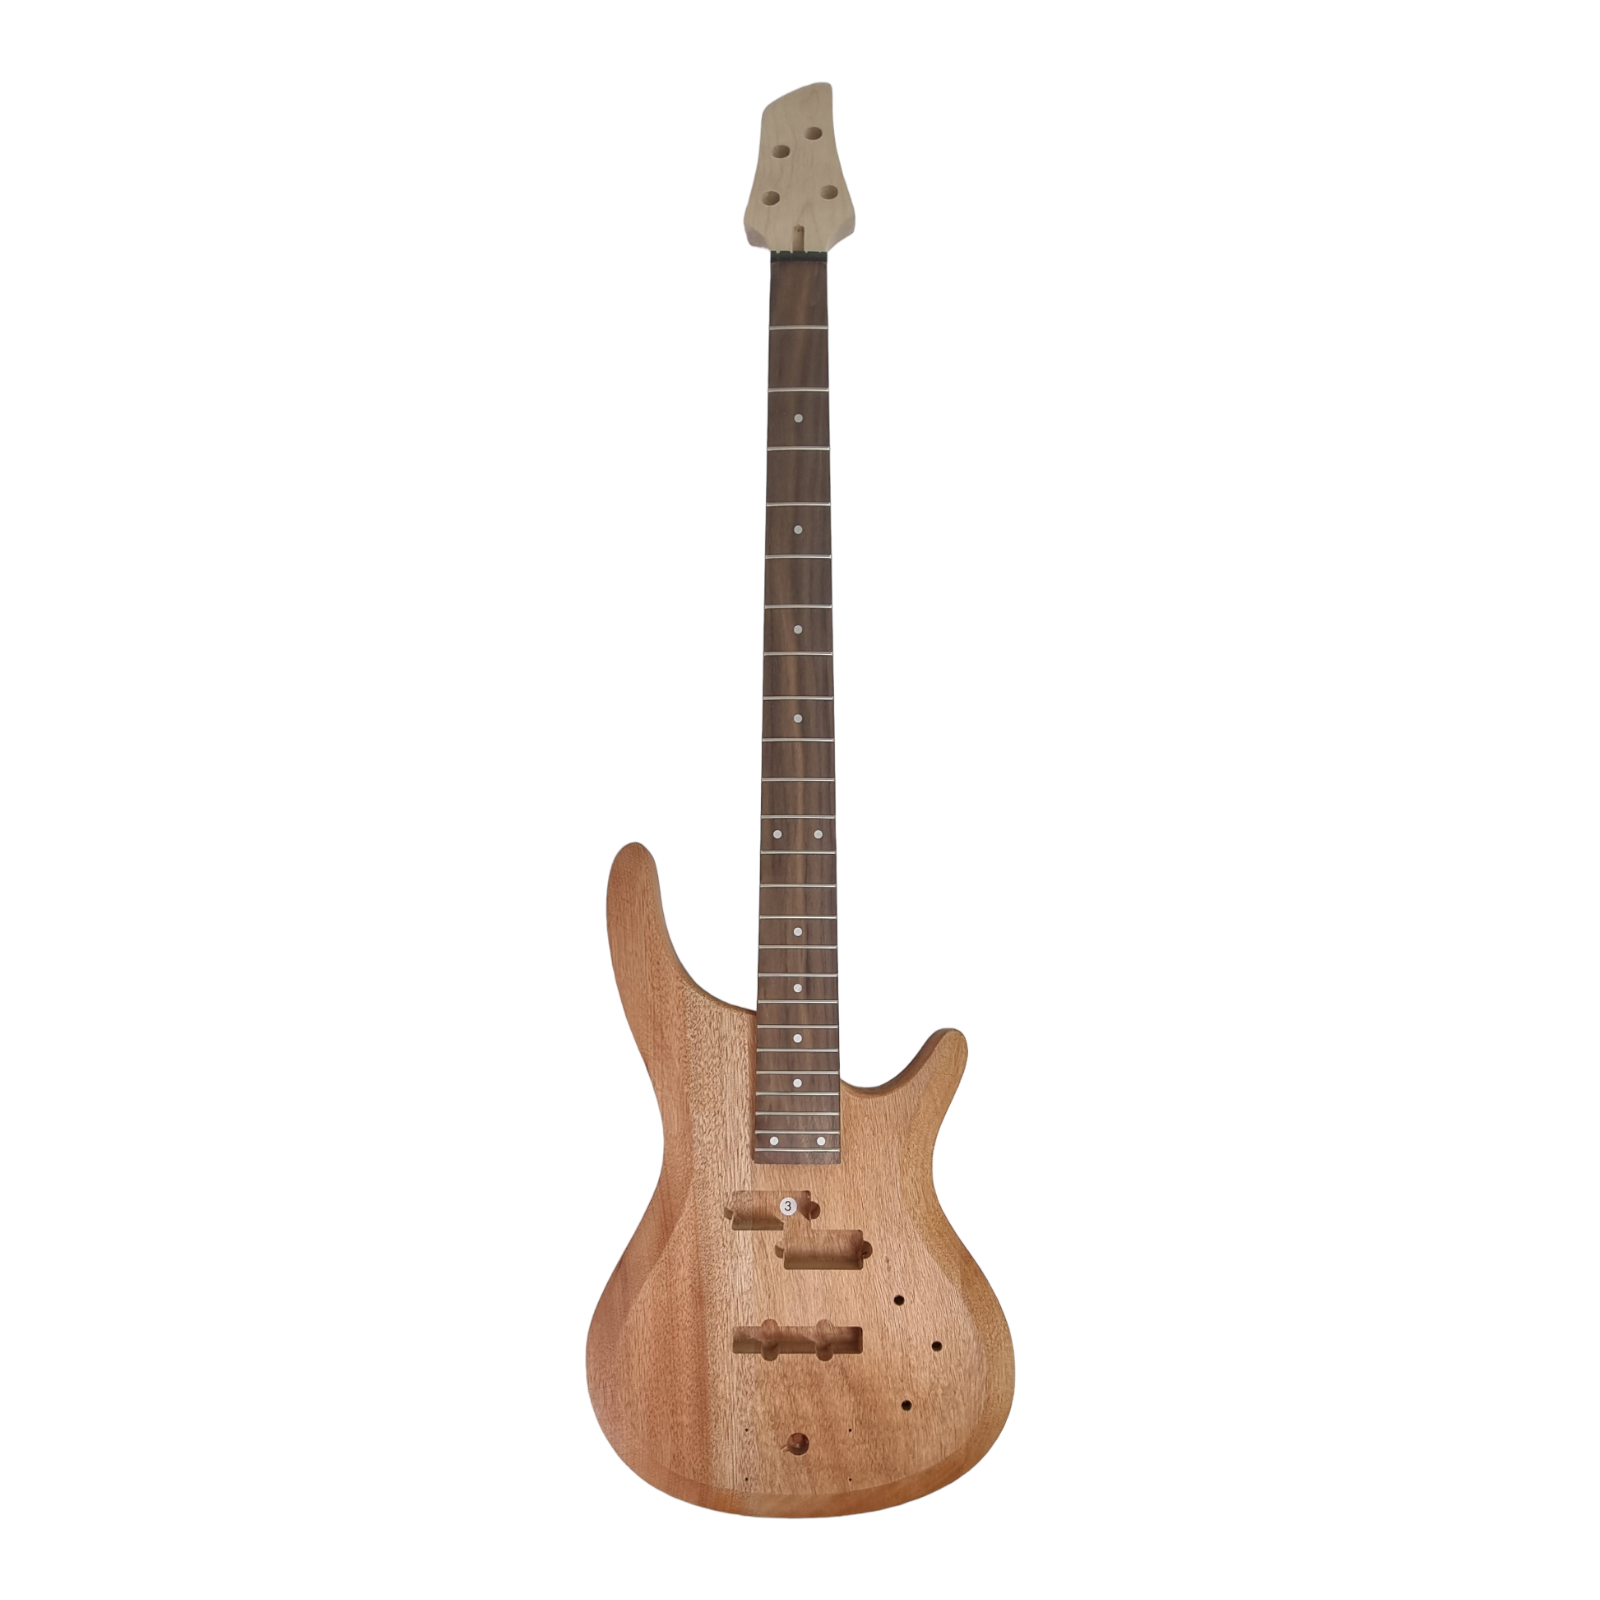 B325DIY Solid mahogany body Electric Bass Guitar DIY Kit w/Bonus Picks